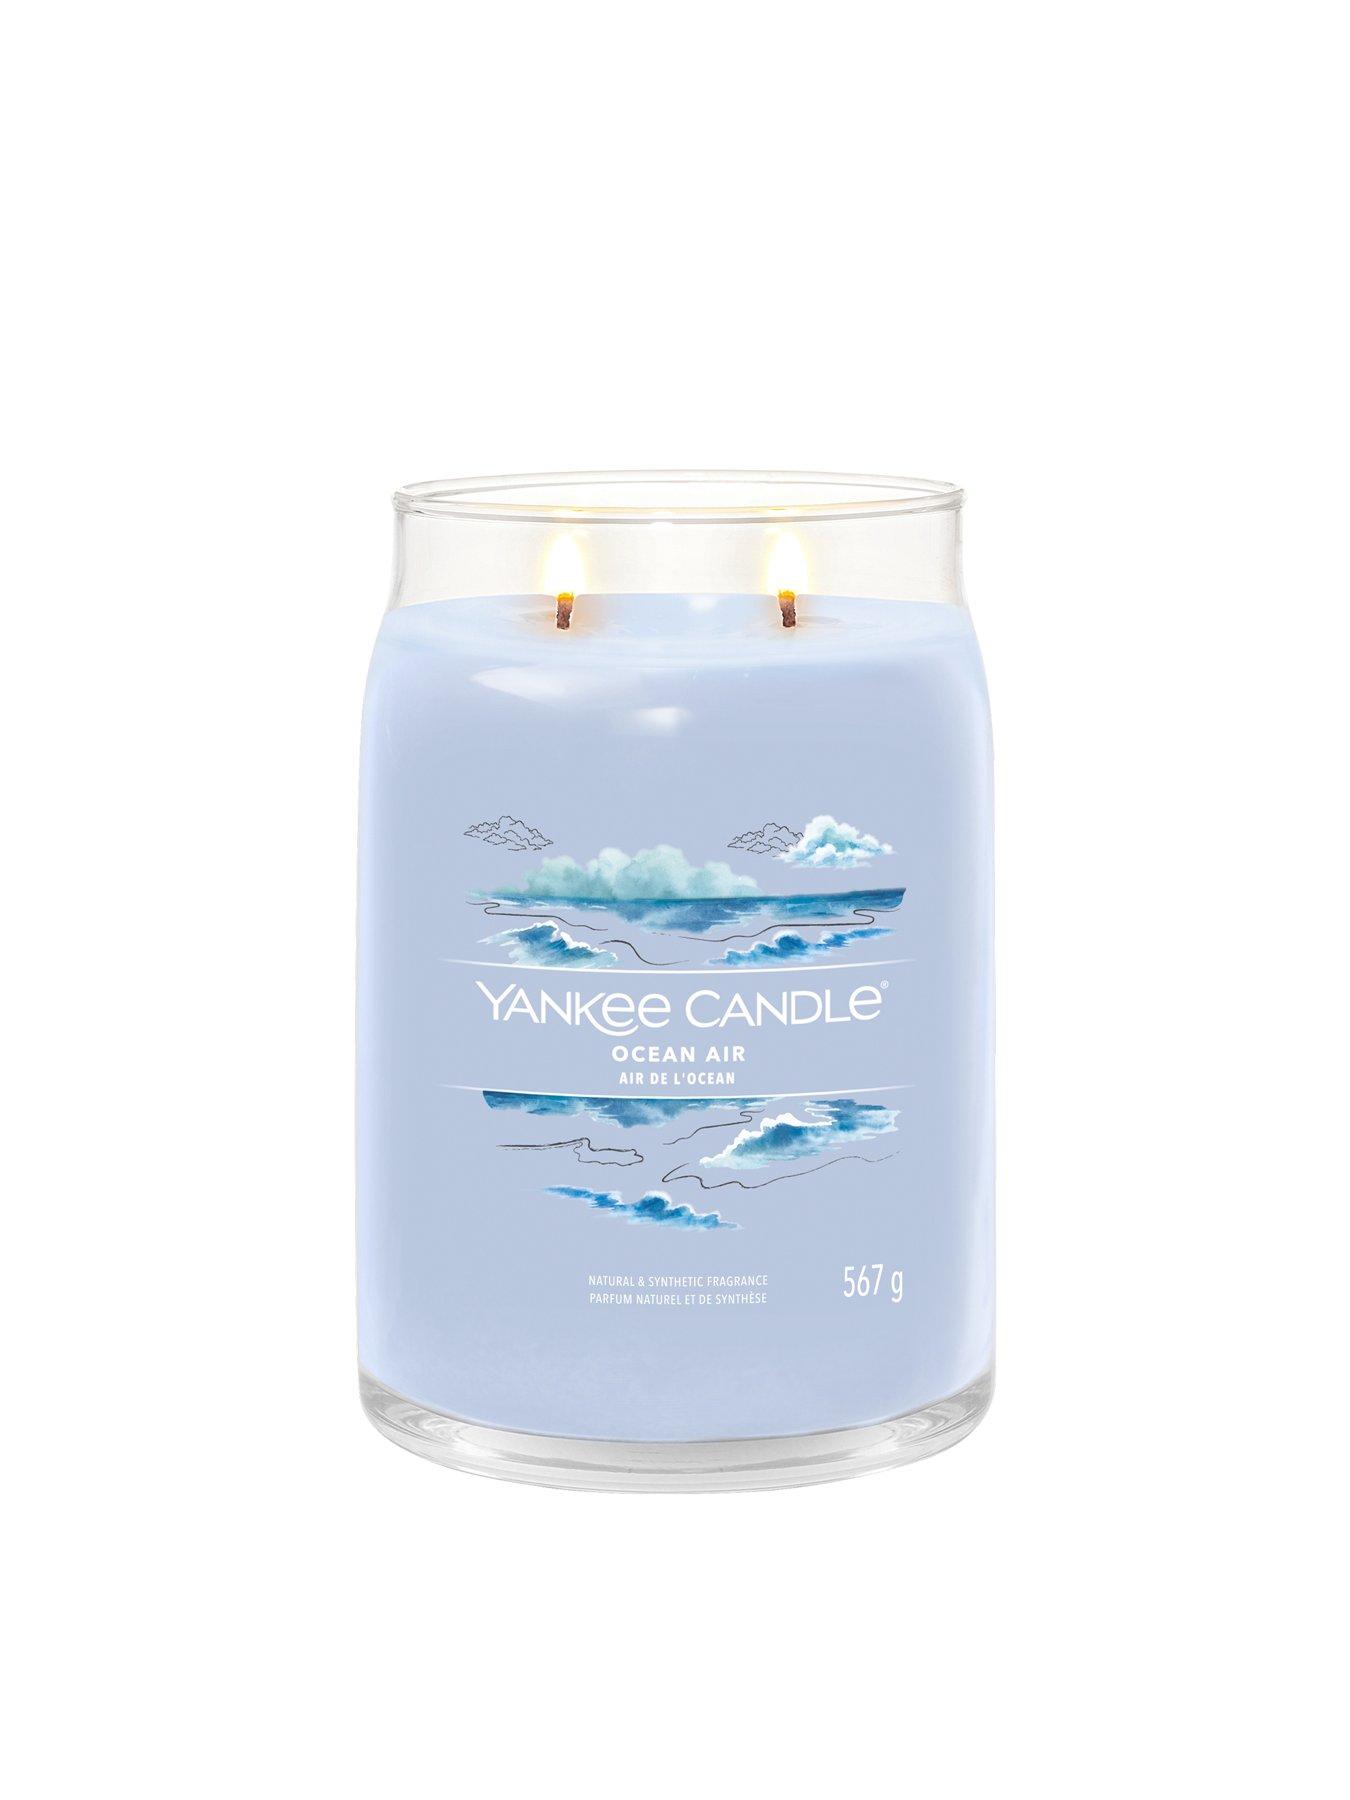 Yankee Candle Signature Large Jar Candle – Ocean Air